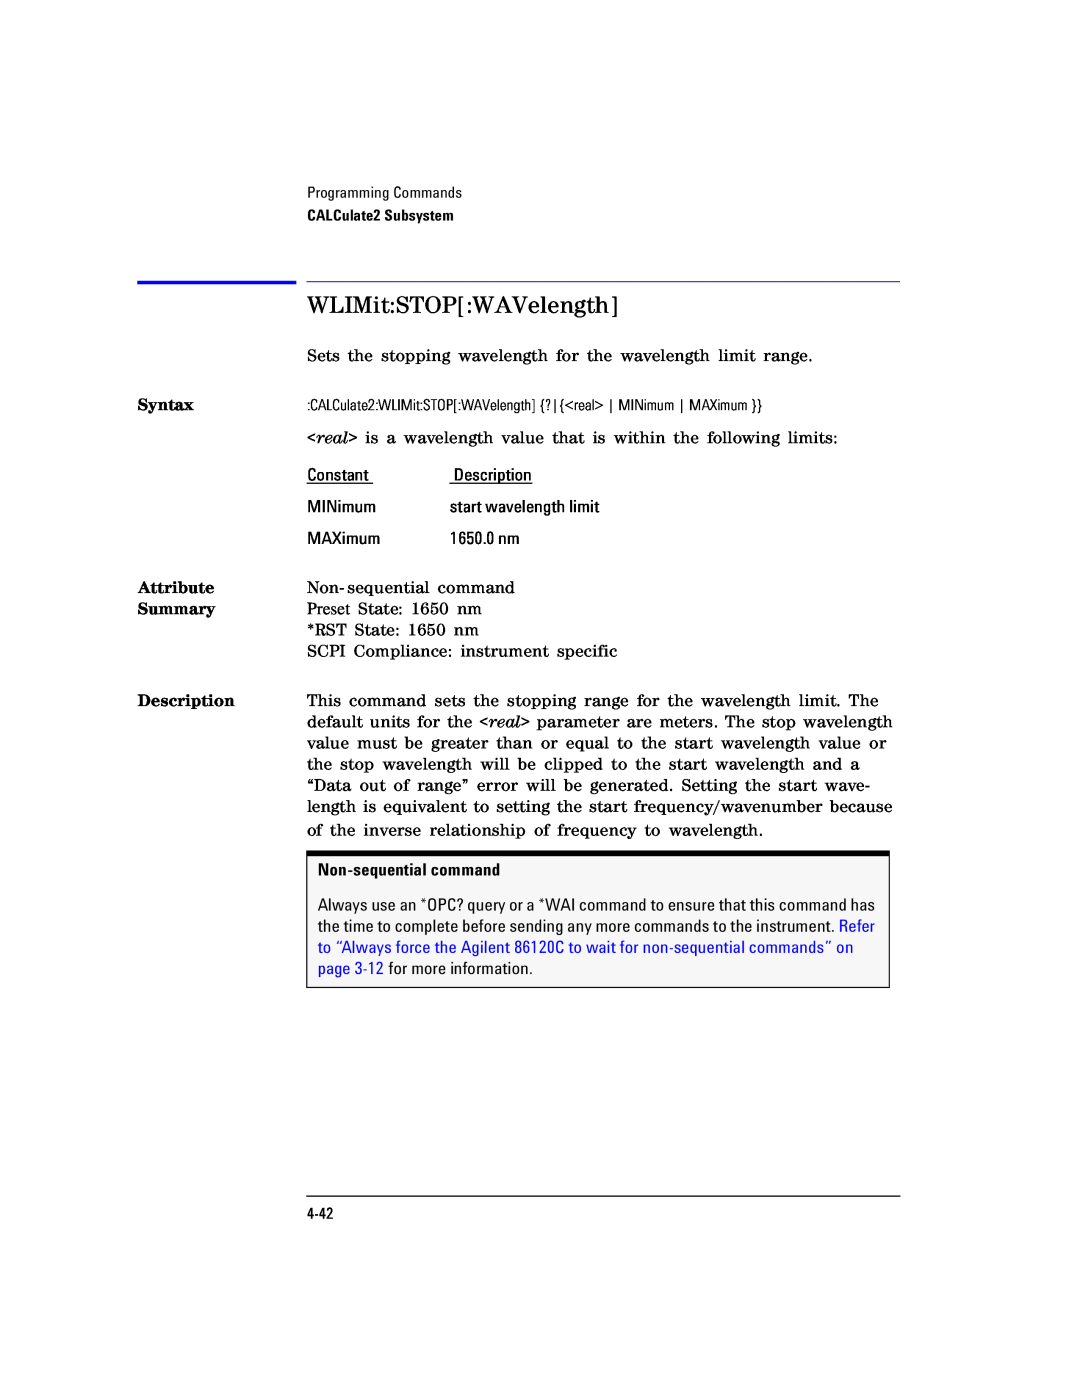 Agilent Technologies Agilent 86120C WLIMitSTOPWAVelength, Syntax, Attribute, Summary, Description, Non-sequential command 